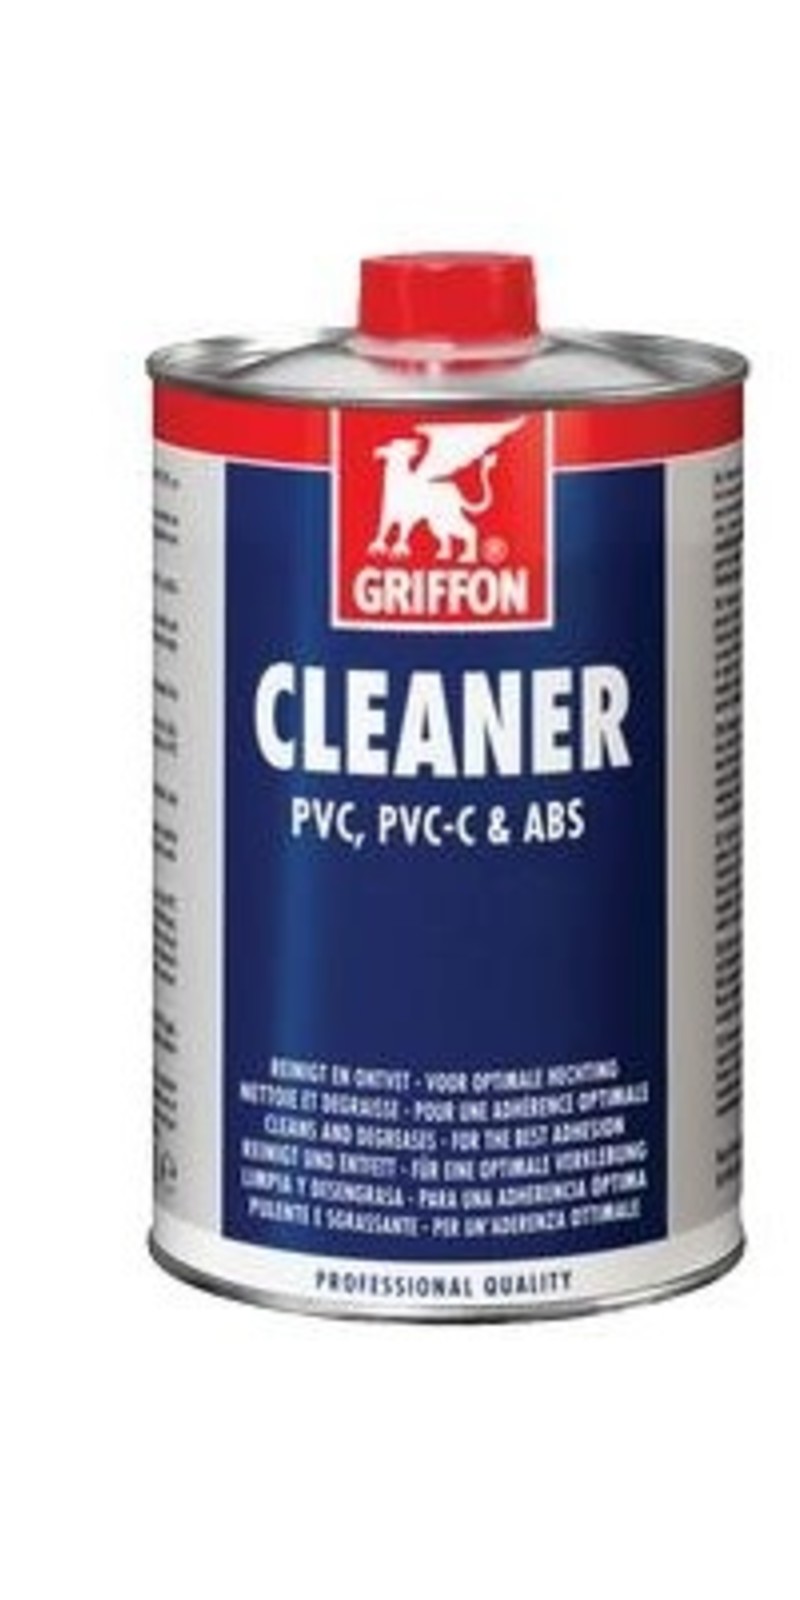 Griffon PVC cleaner reinigingsmiddel | 500 ml